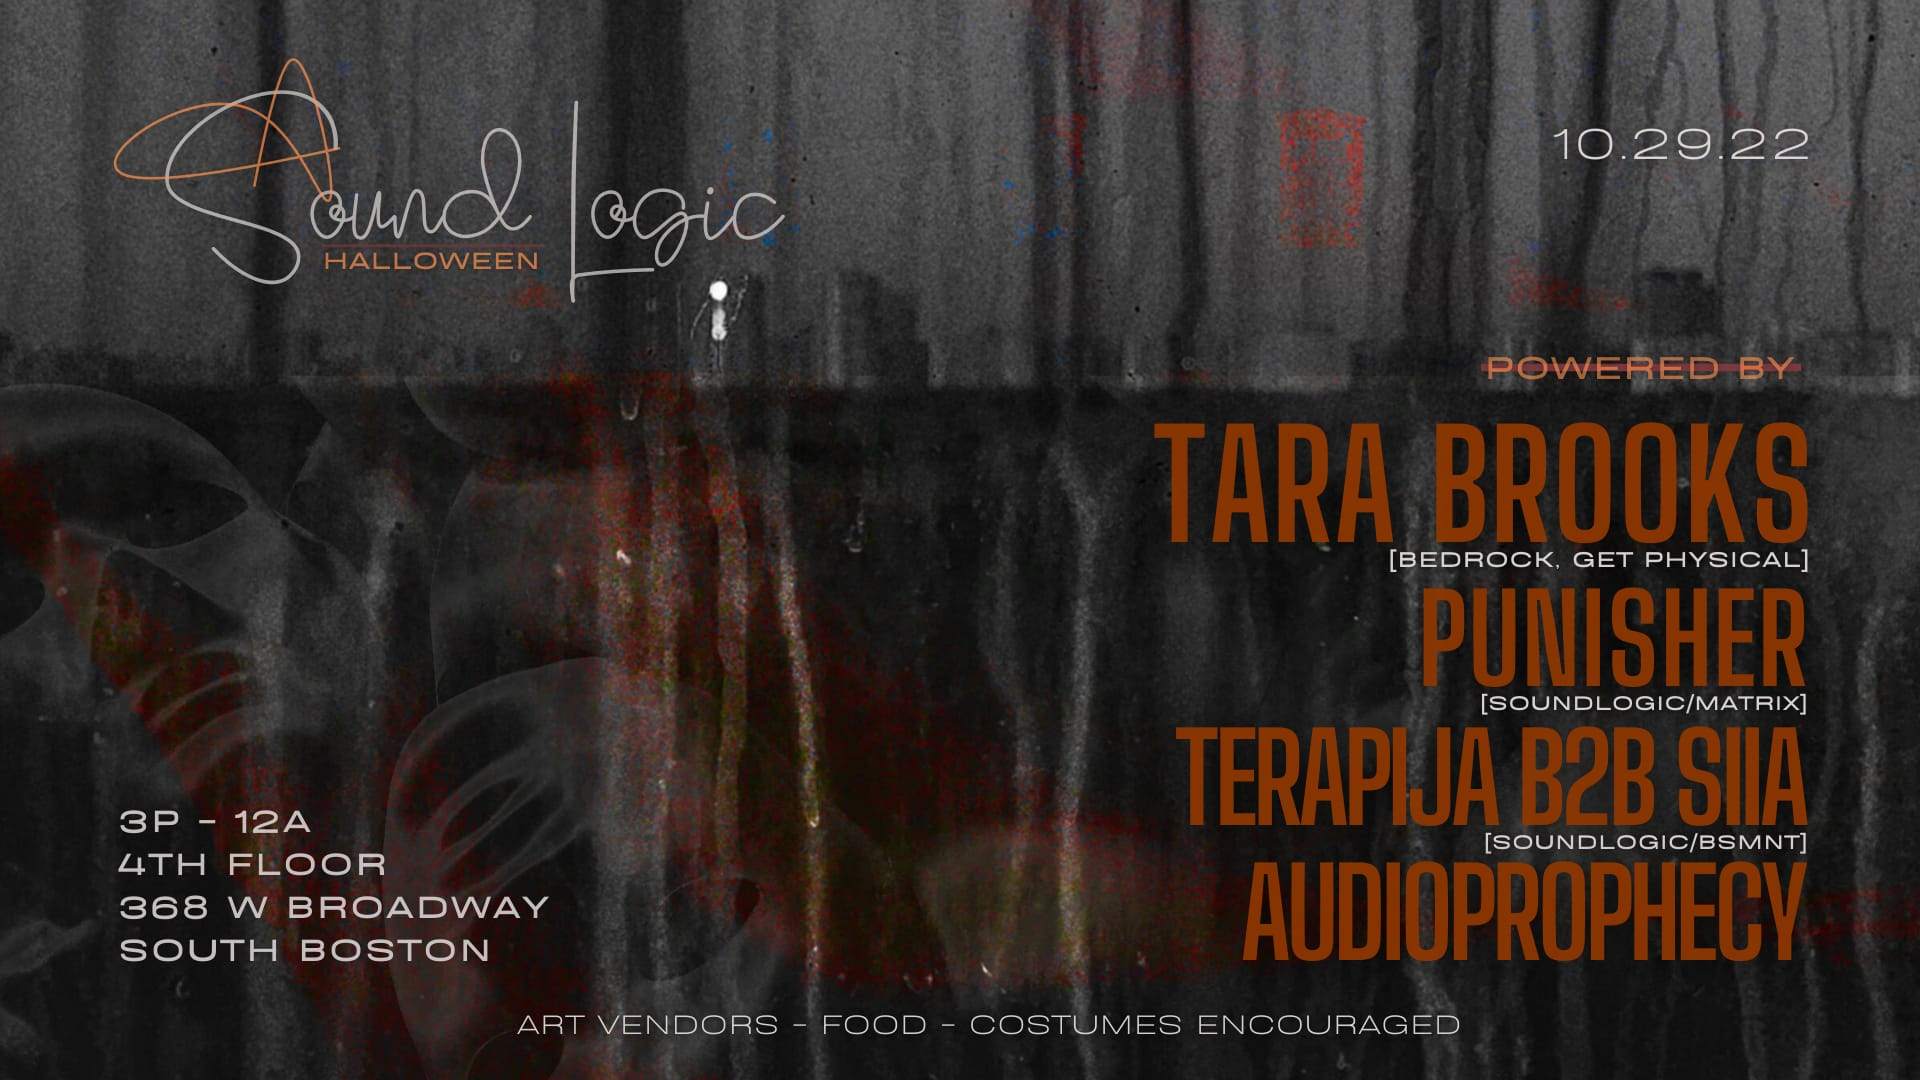 A Sound Logic Halloween - Tara Brooks (Bedrock), Punisher, TERAPIJA b2b SIIA, Audioprophecy - フライヤー表